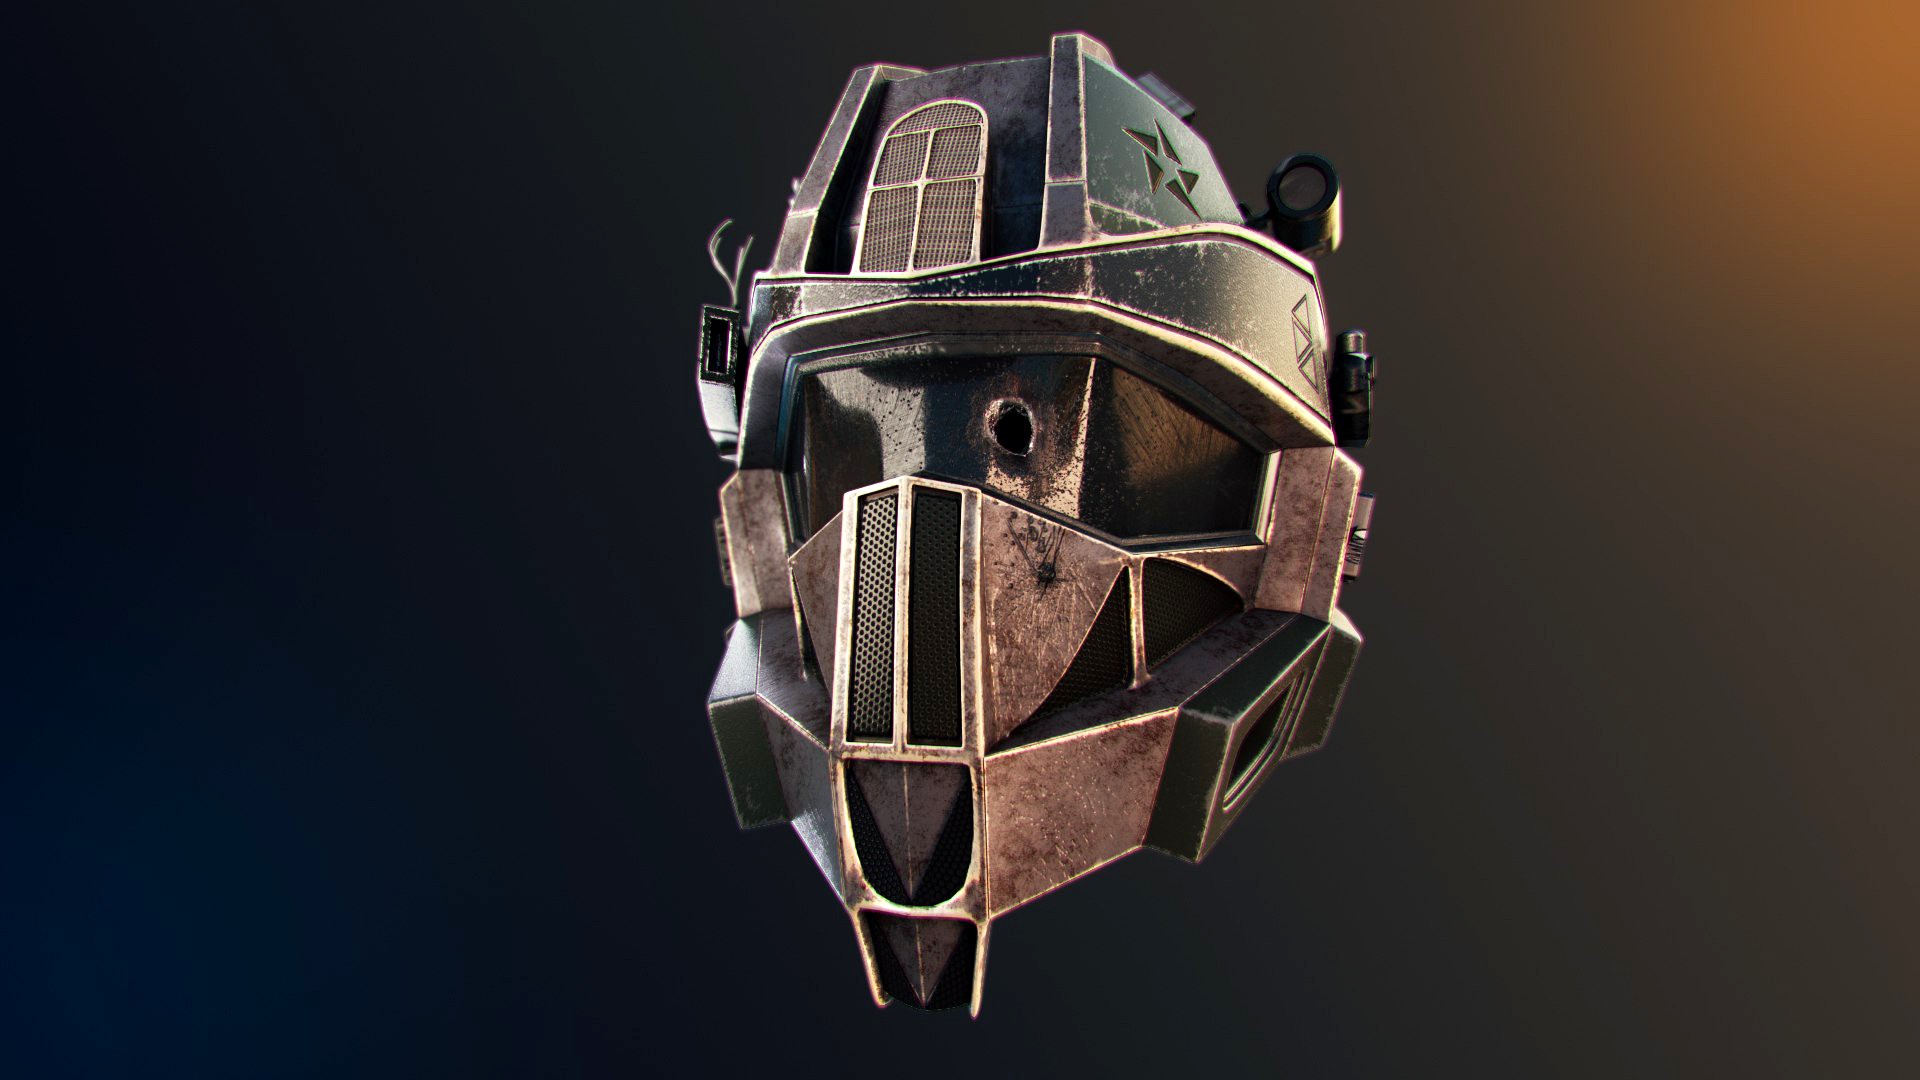 Starwars helmet